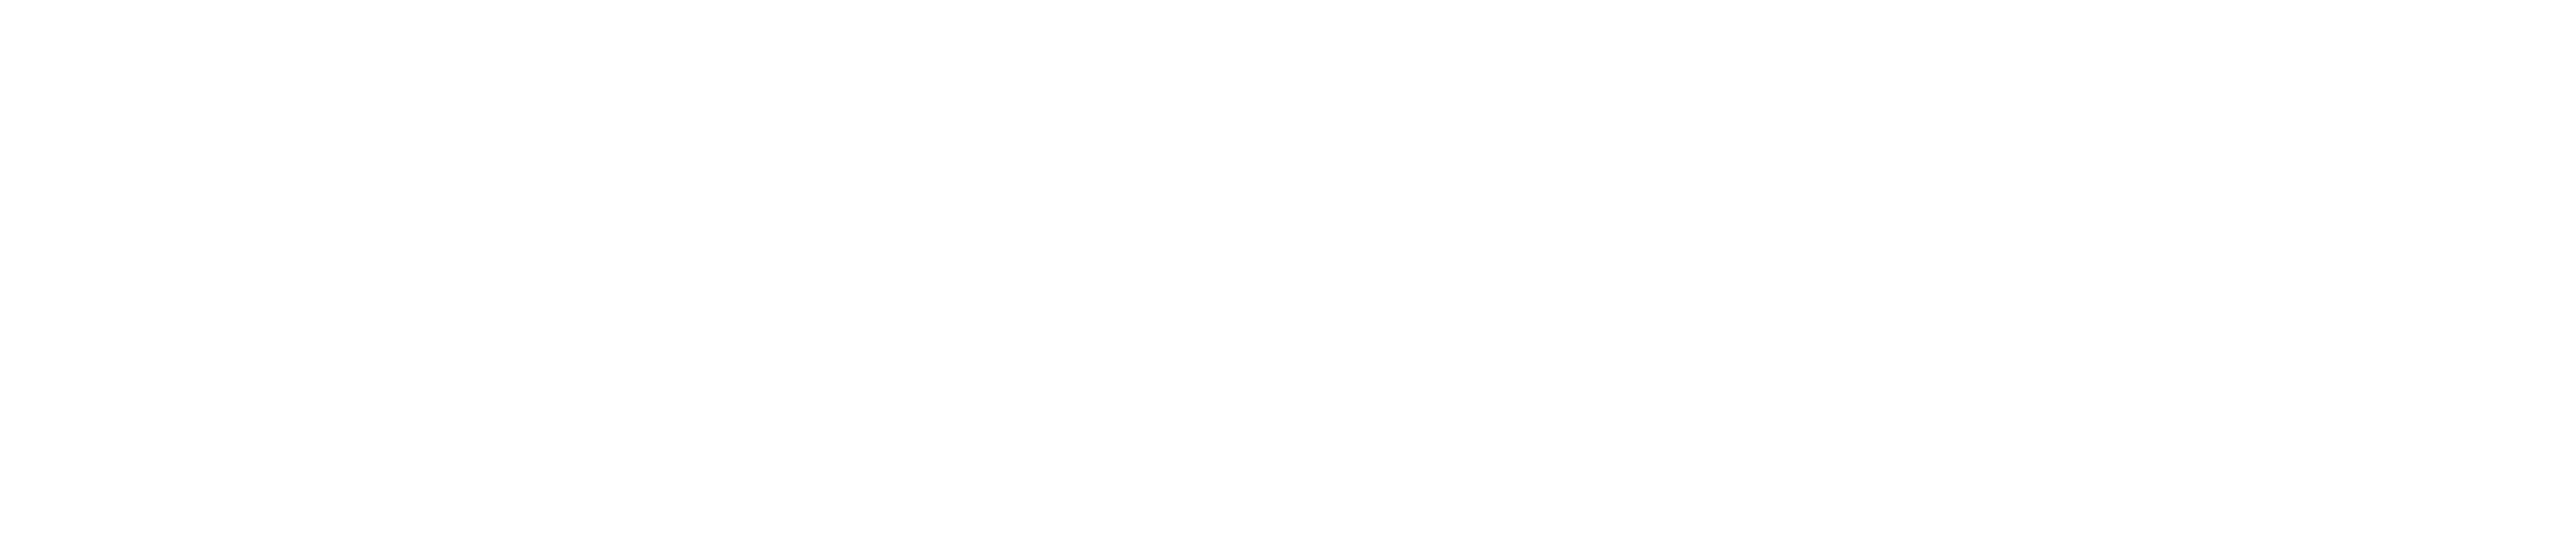 sound sleep medical logo